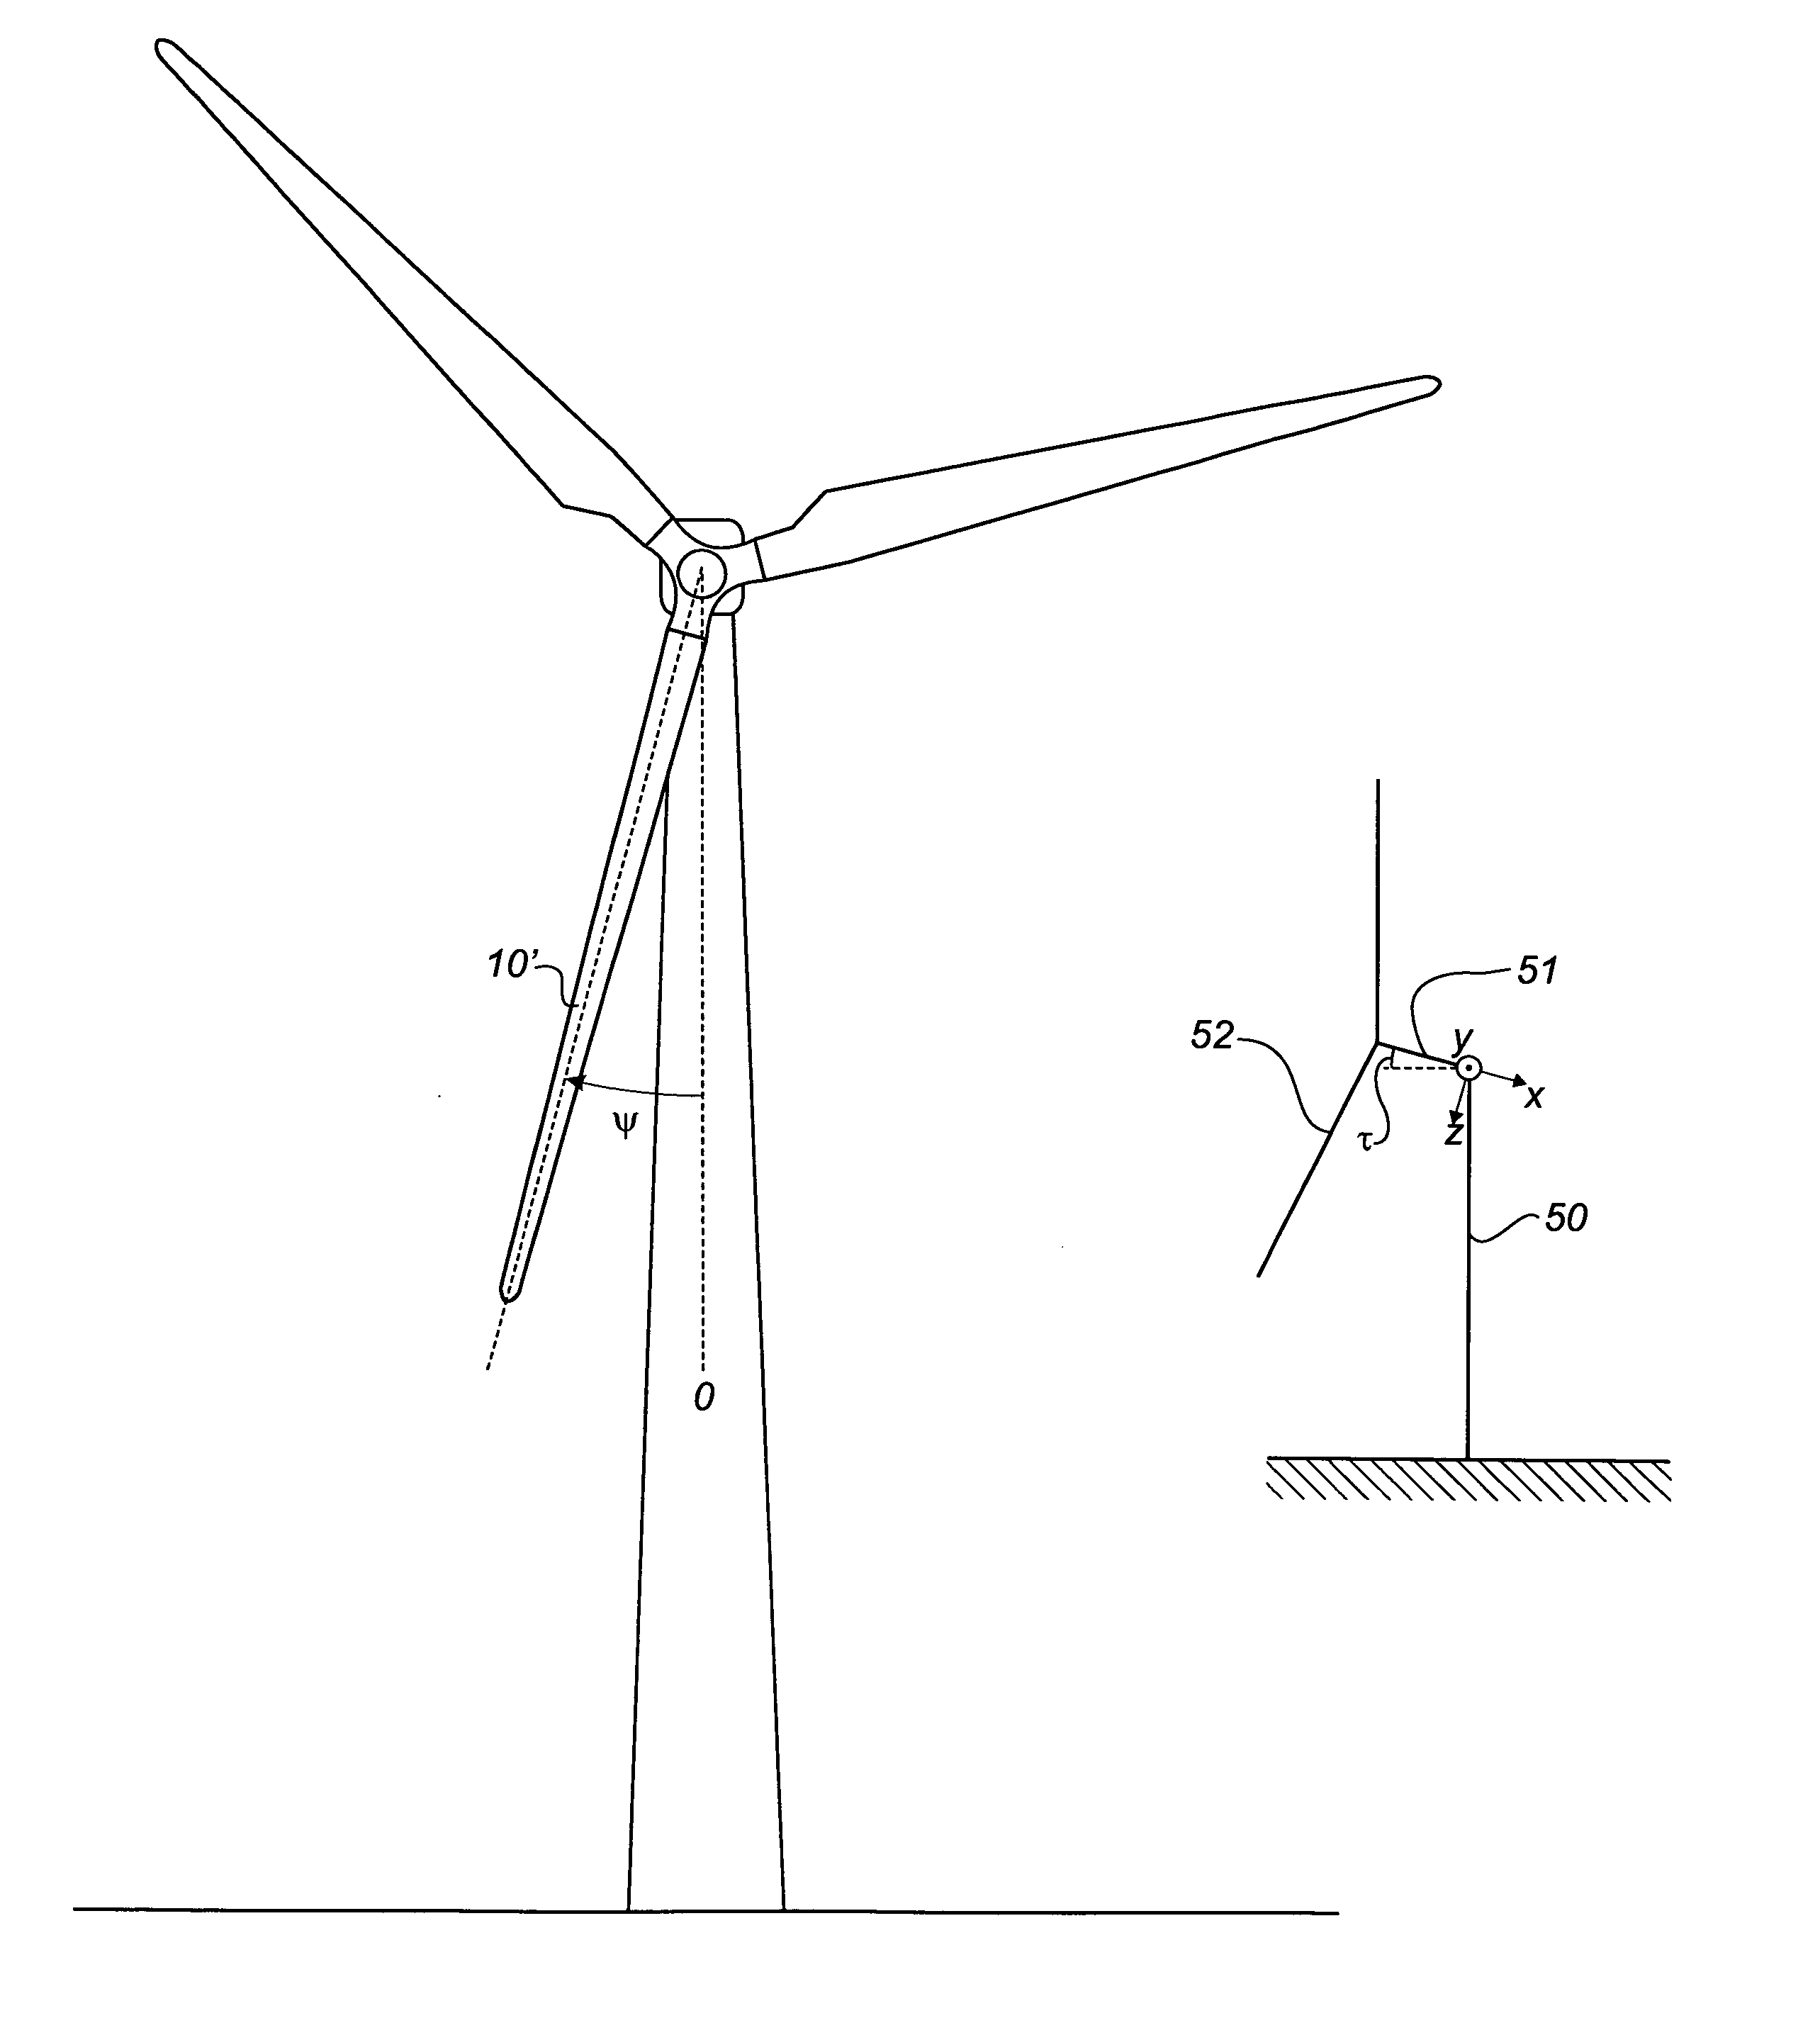 Method of in situ calibrating load sensors of a wind turbine blade